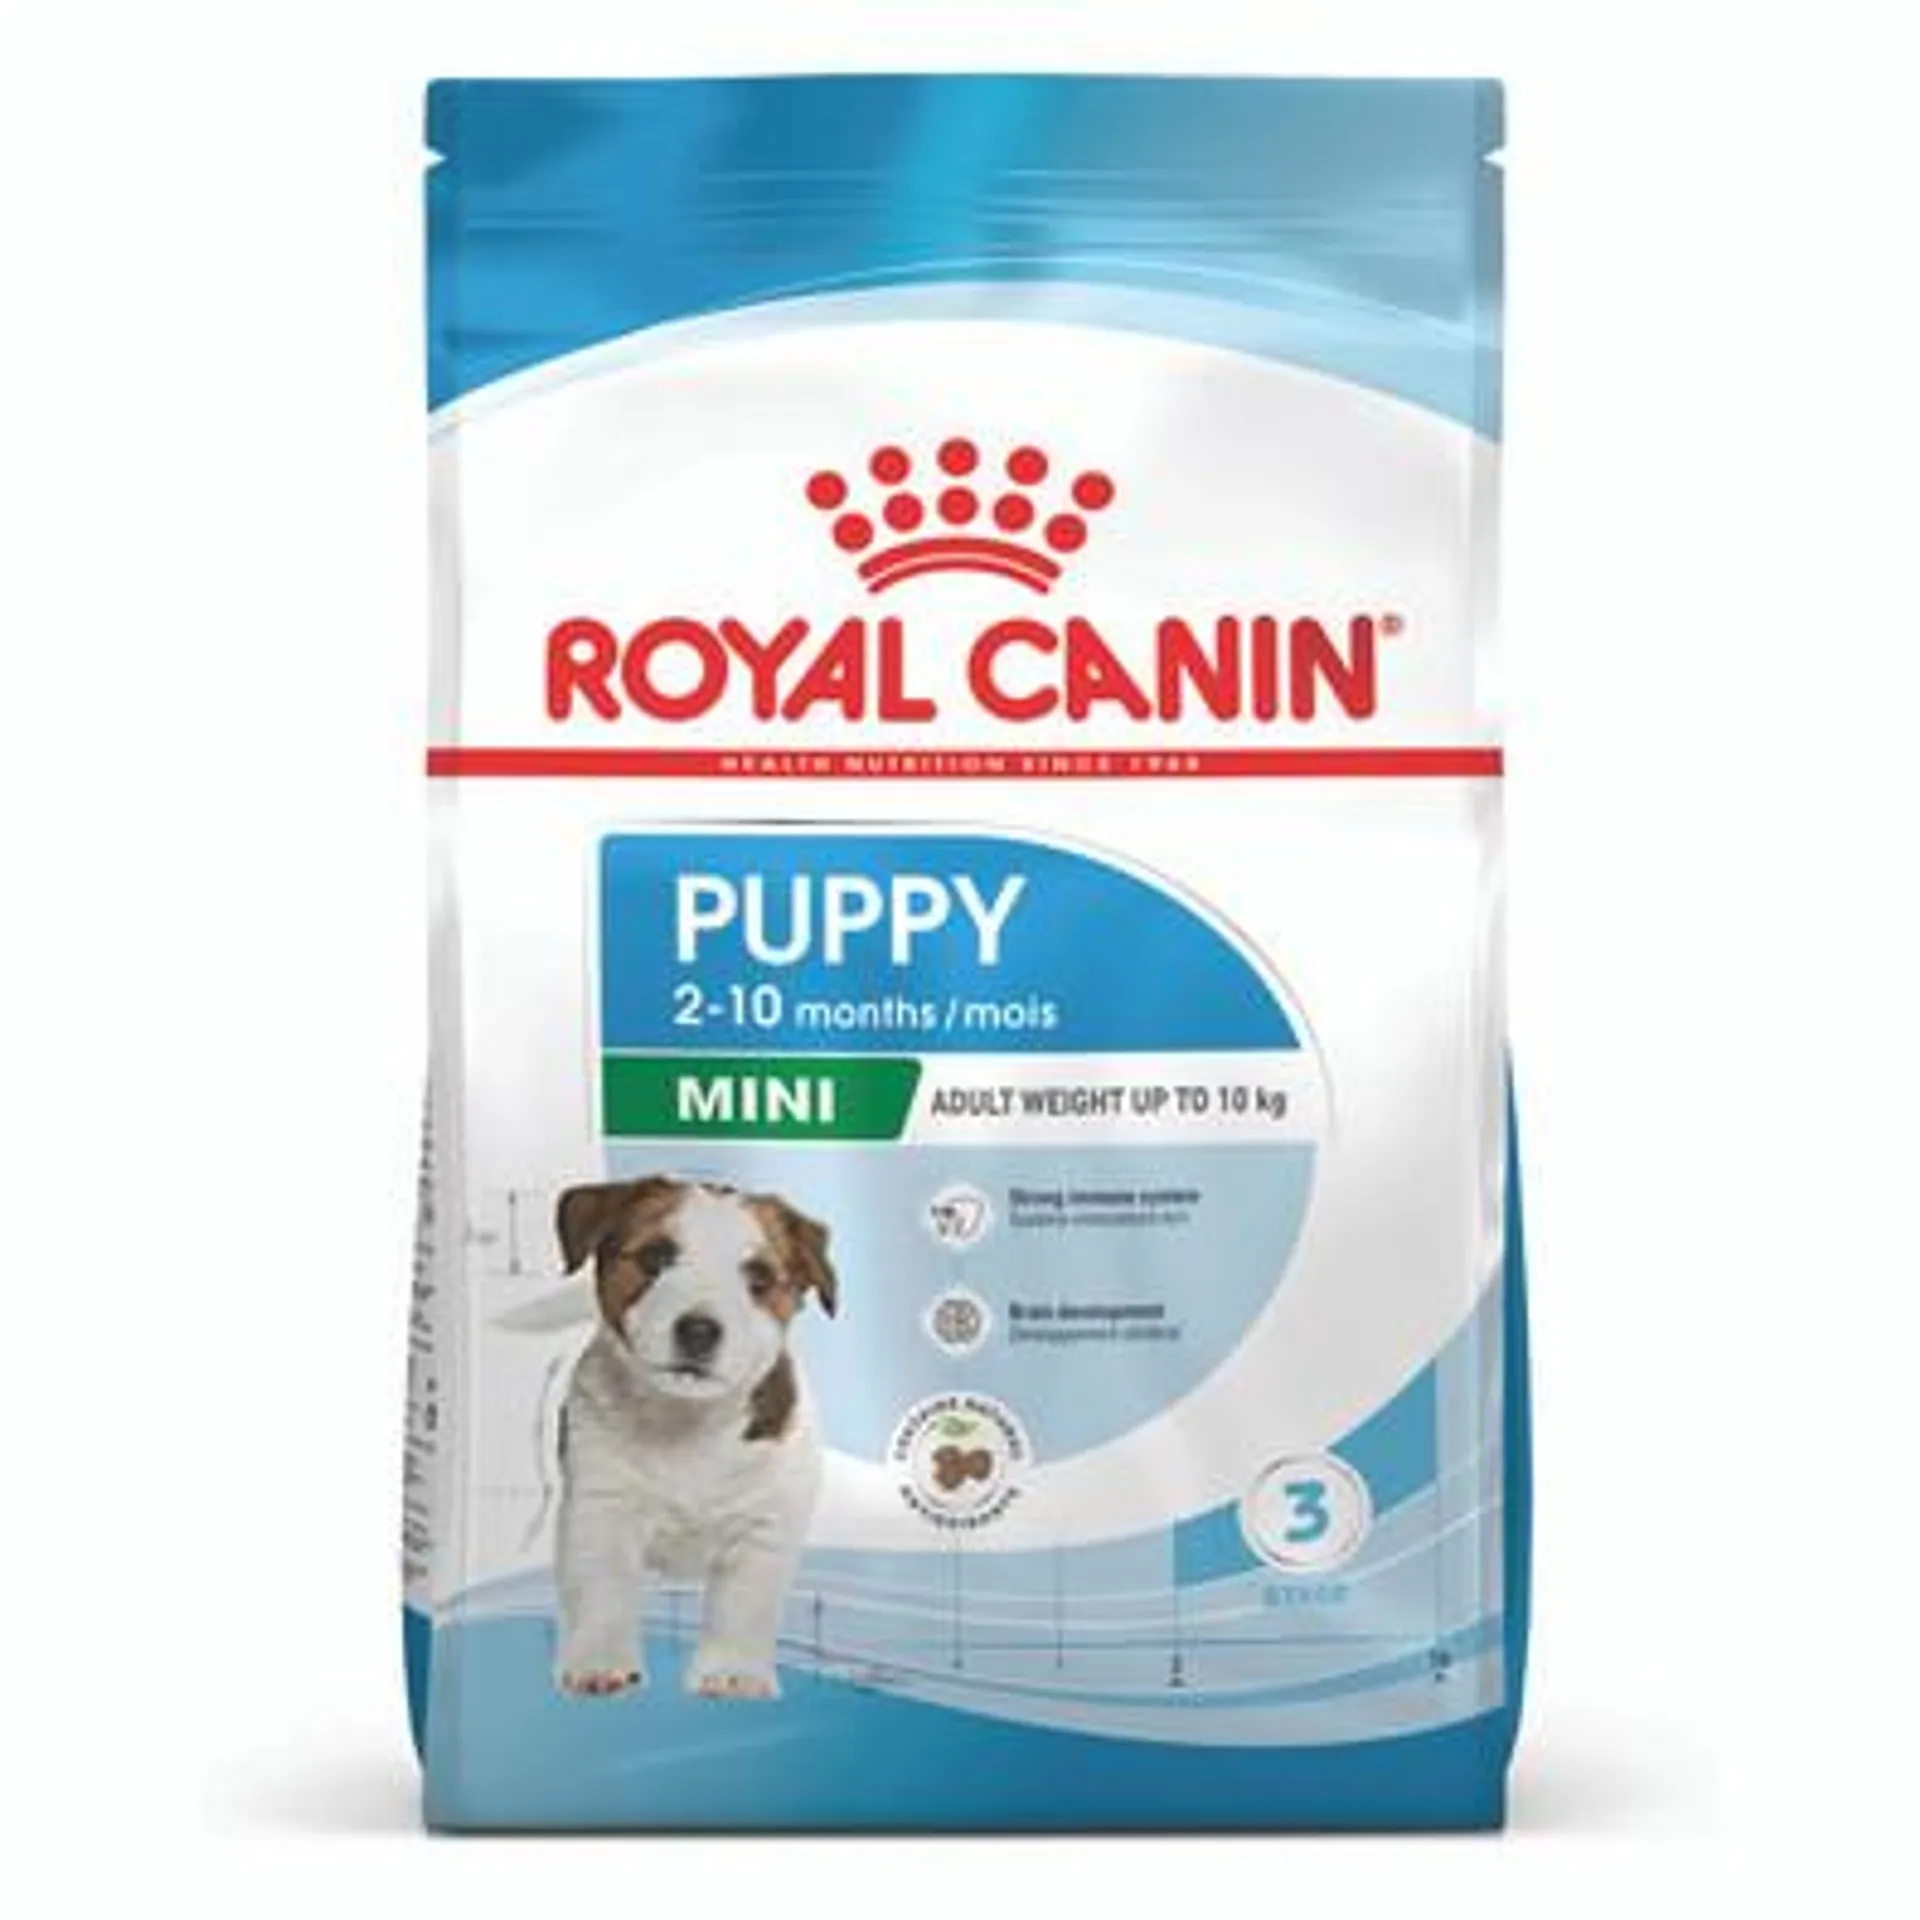 Royal Canin Mini Puppy Dry Dog Food